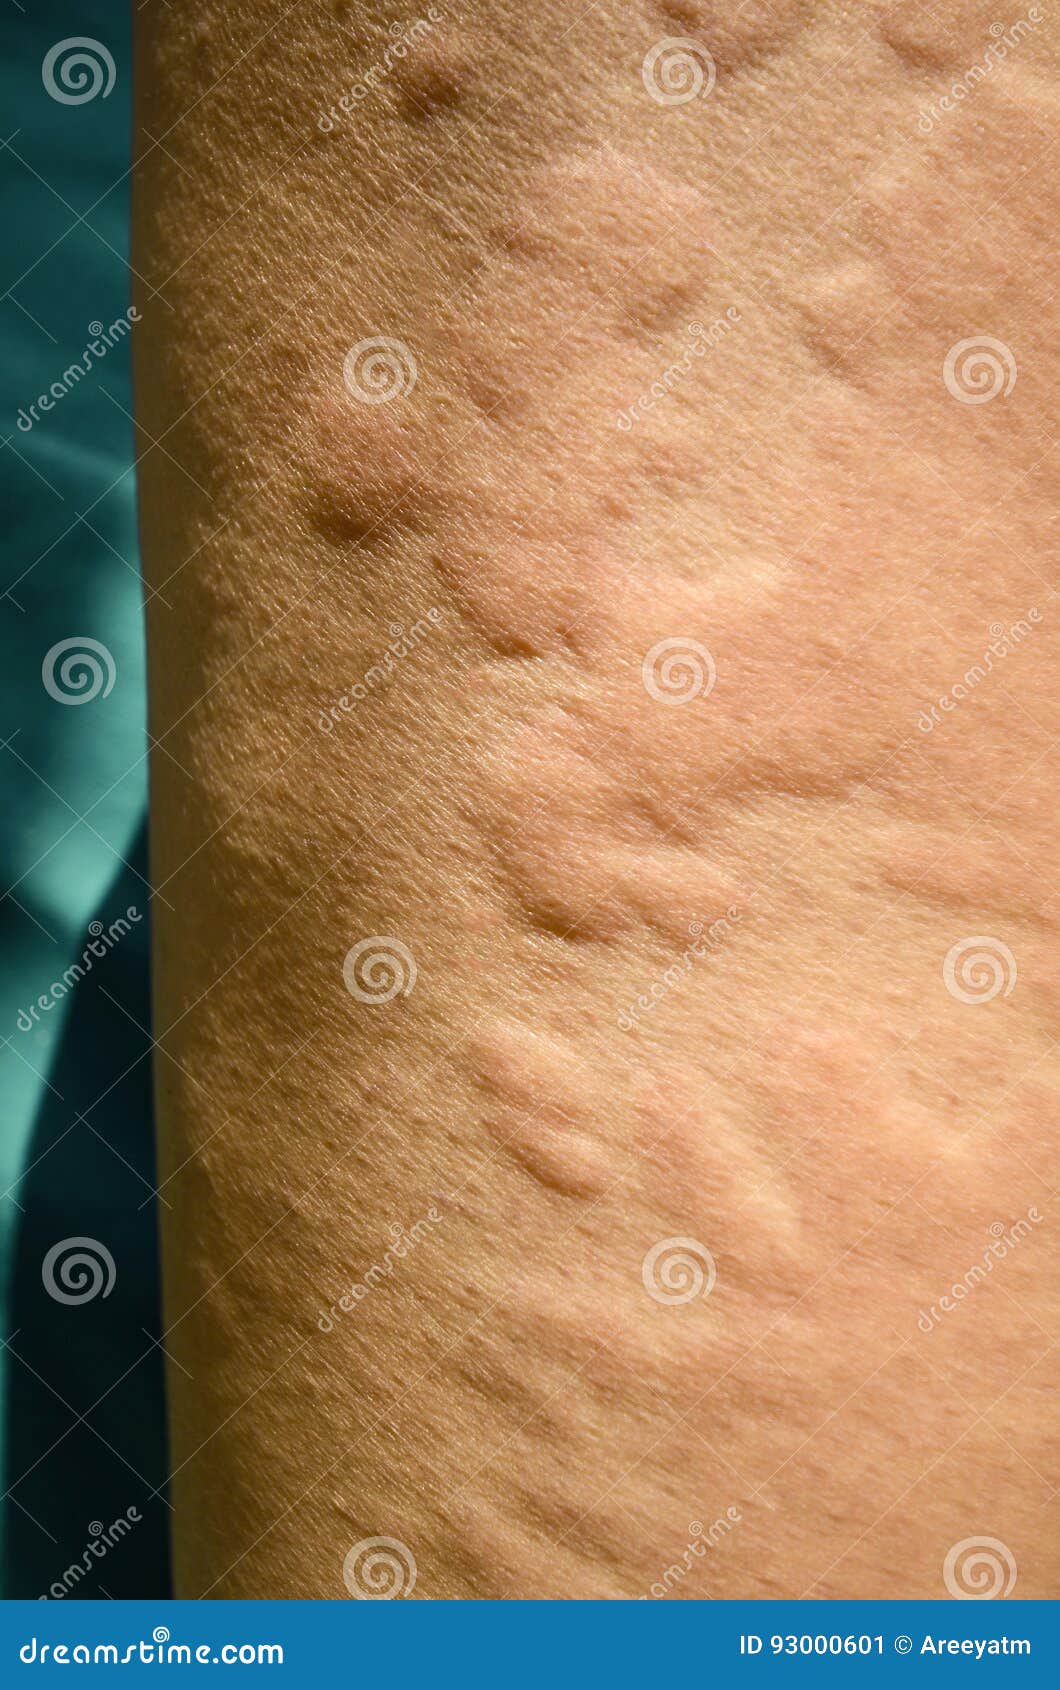 skin rash, urticaria, allergic skin reaction.